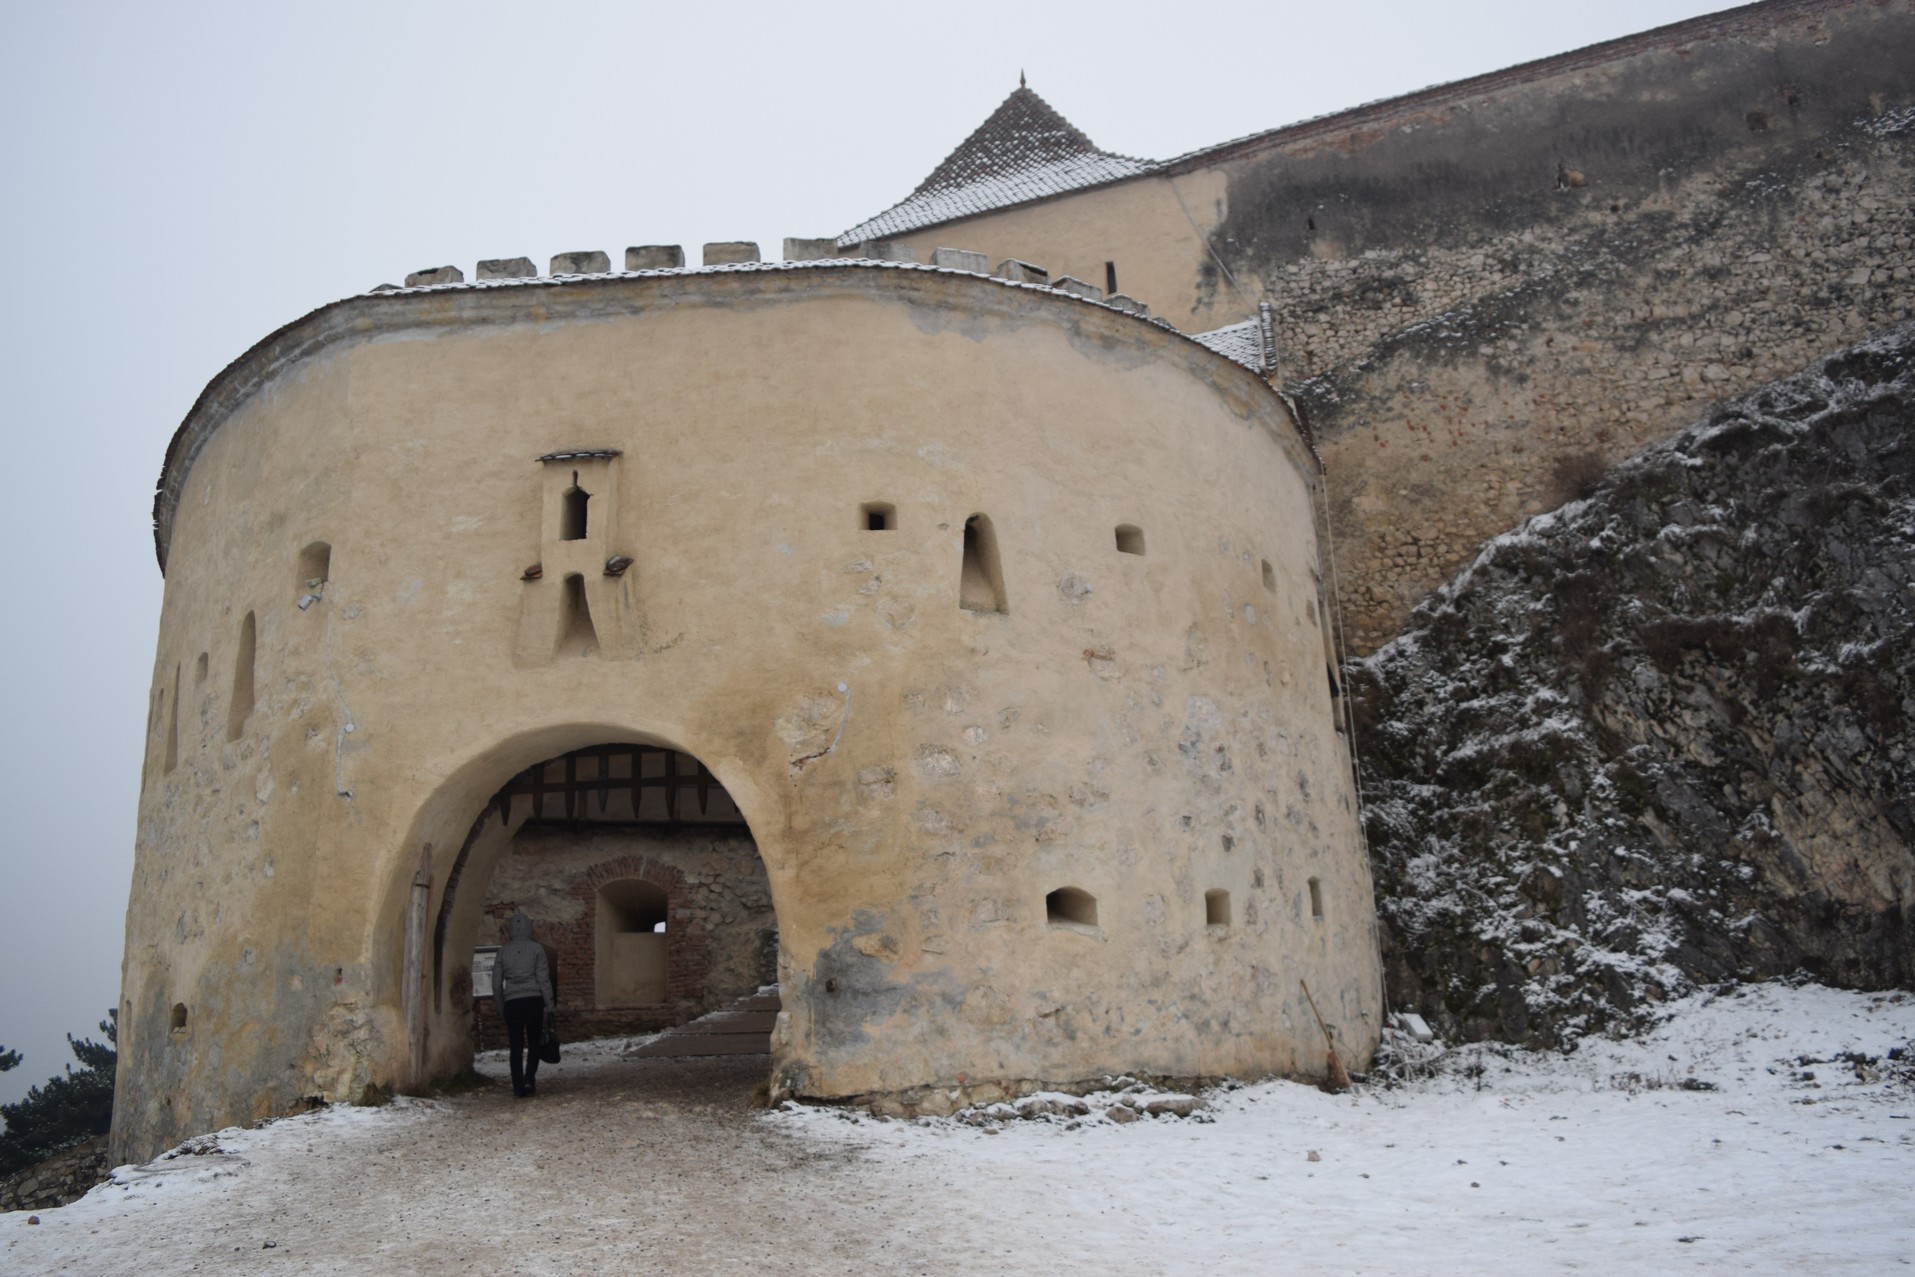 Rasnov citadel